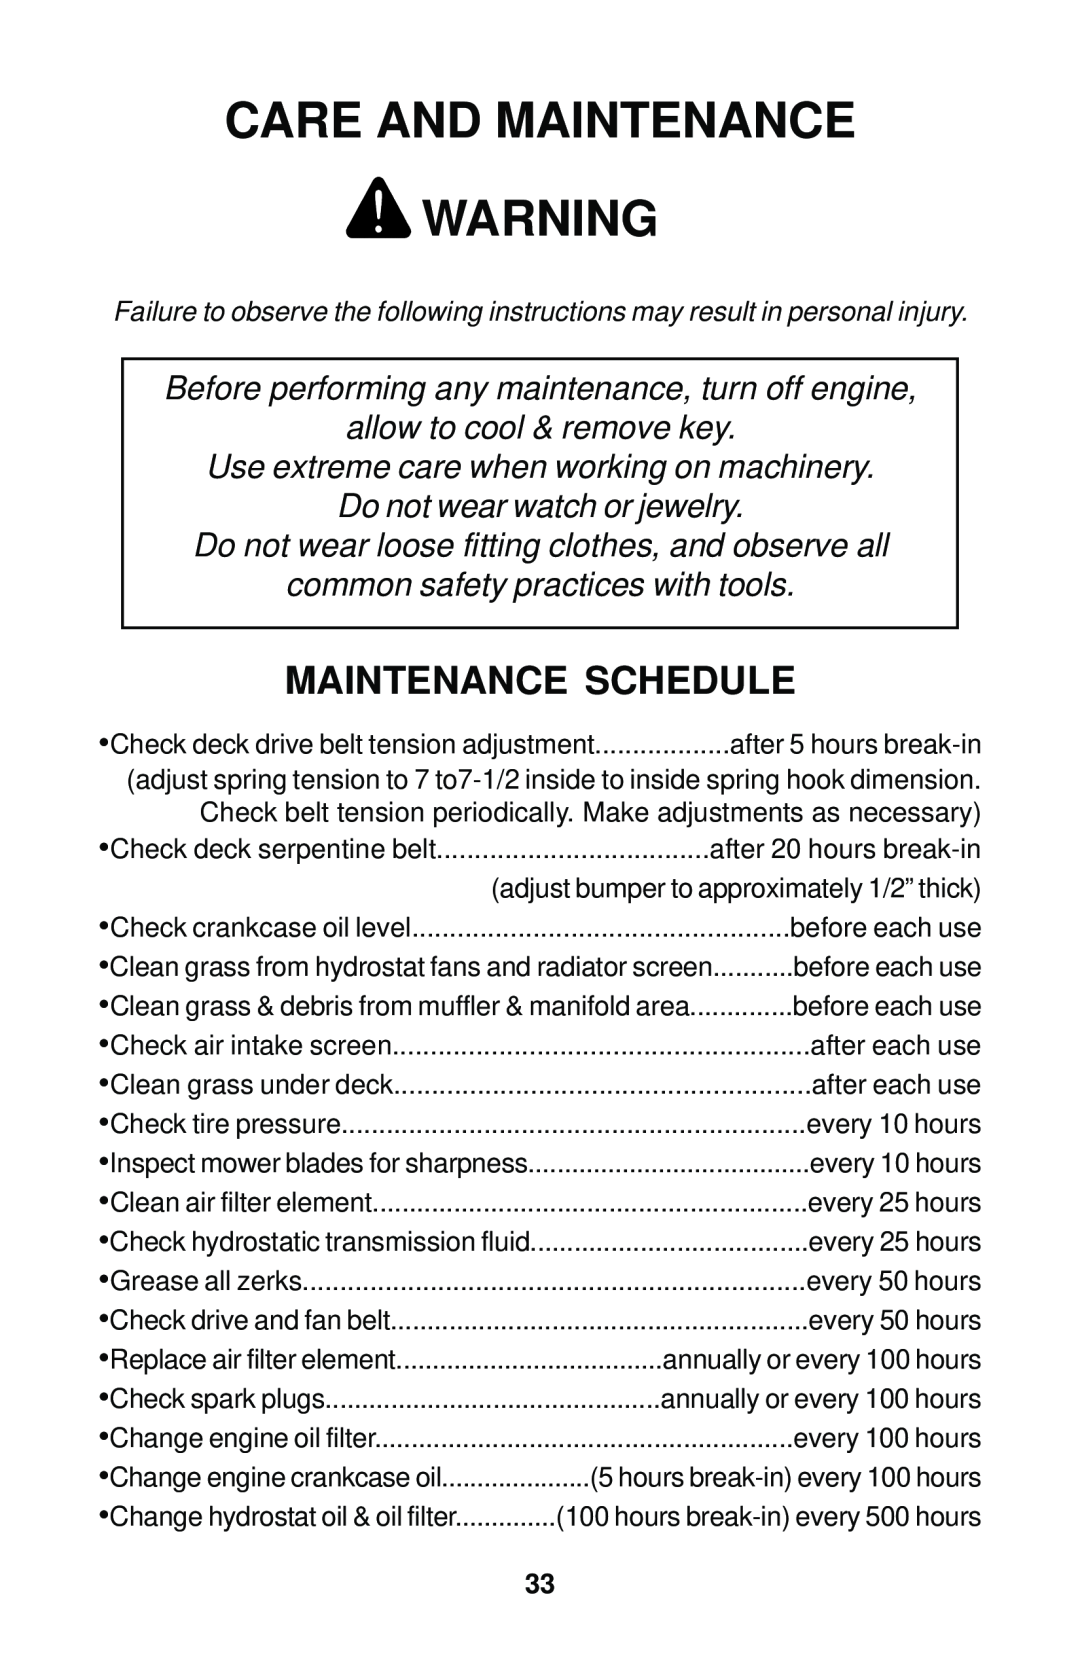 Dixon 12881-1104 manual Care And Maintenance, Maintenance Schedule 